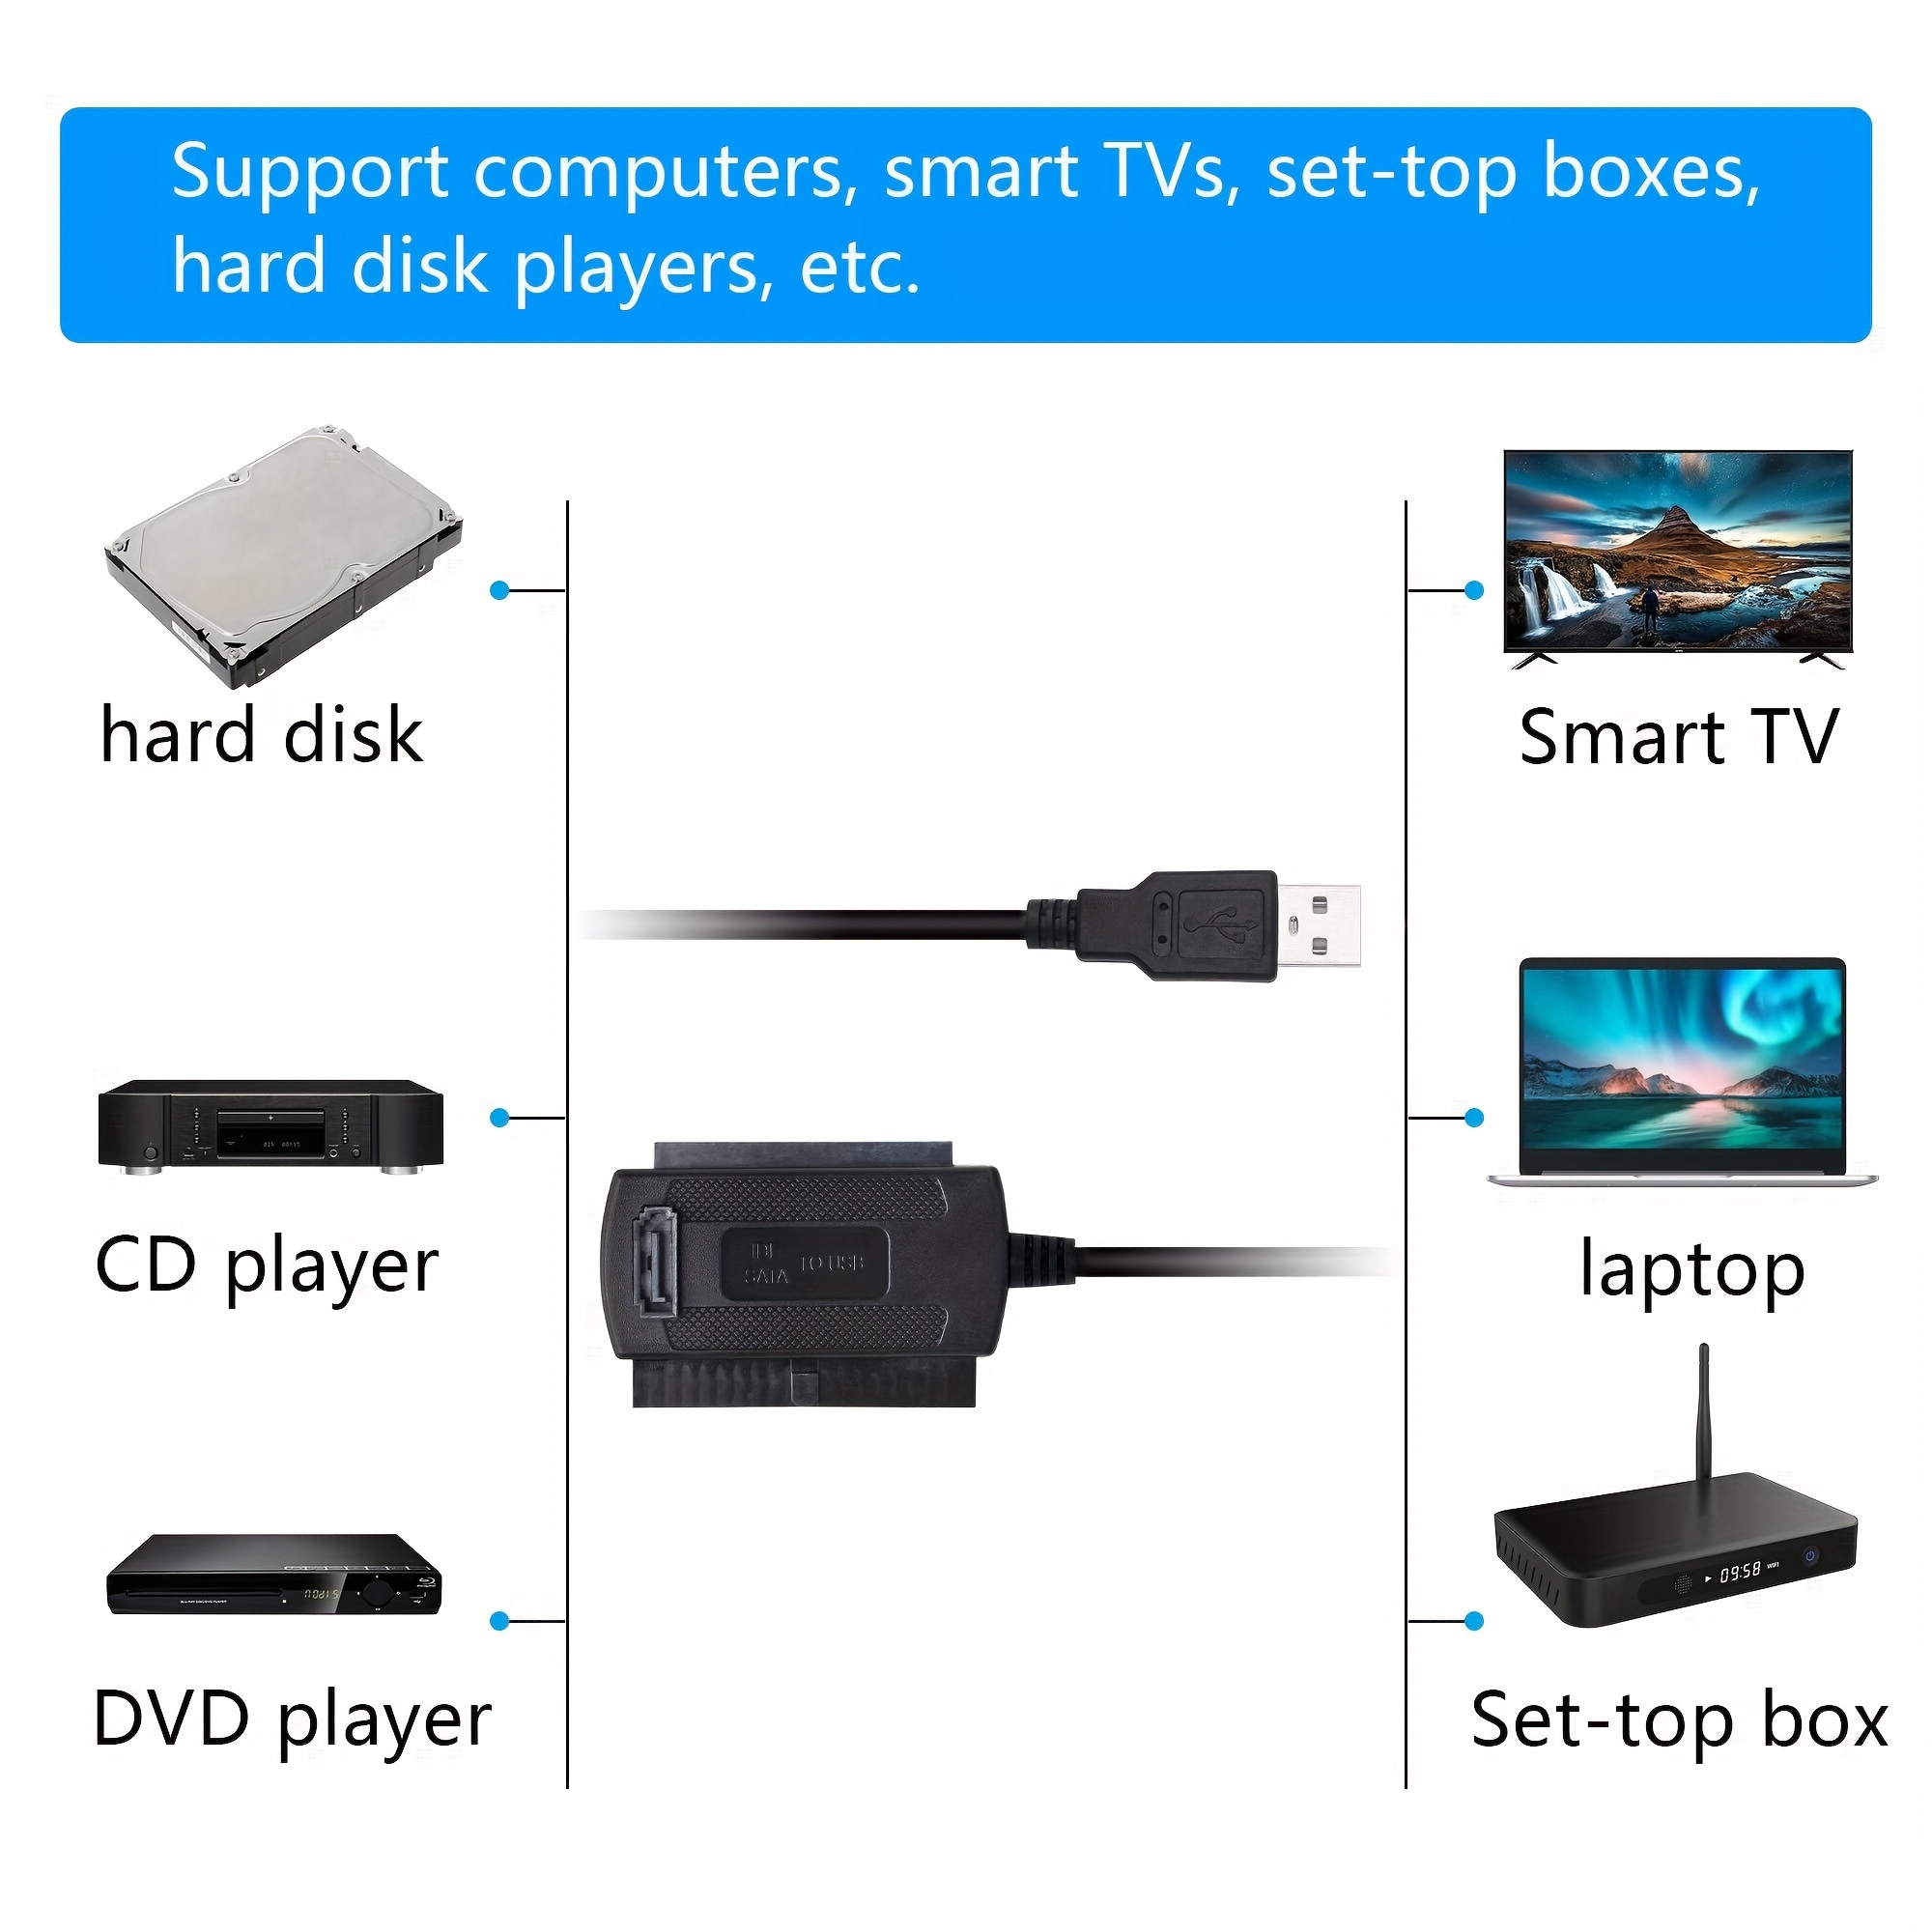  JINHEZO USB 2.0 to SATA + IDE (2.5 / 3.5 / 5.25) Cable  Adapter,Black : Electronics